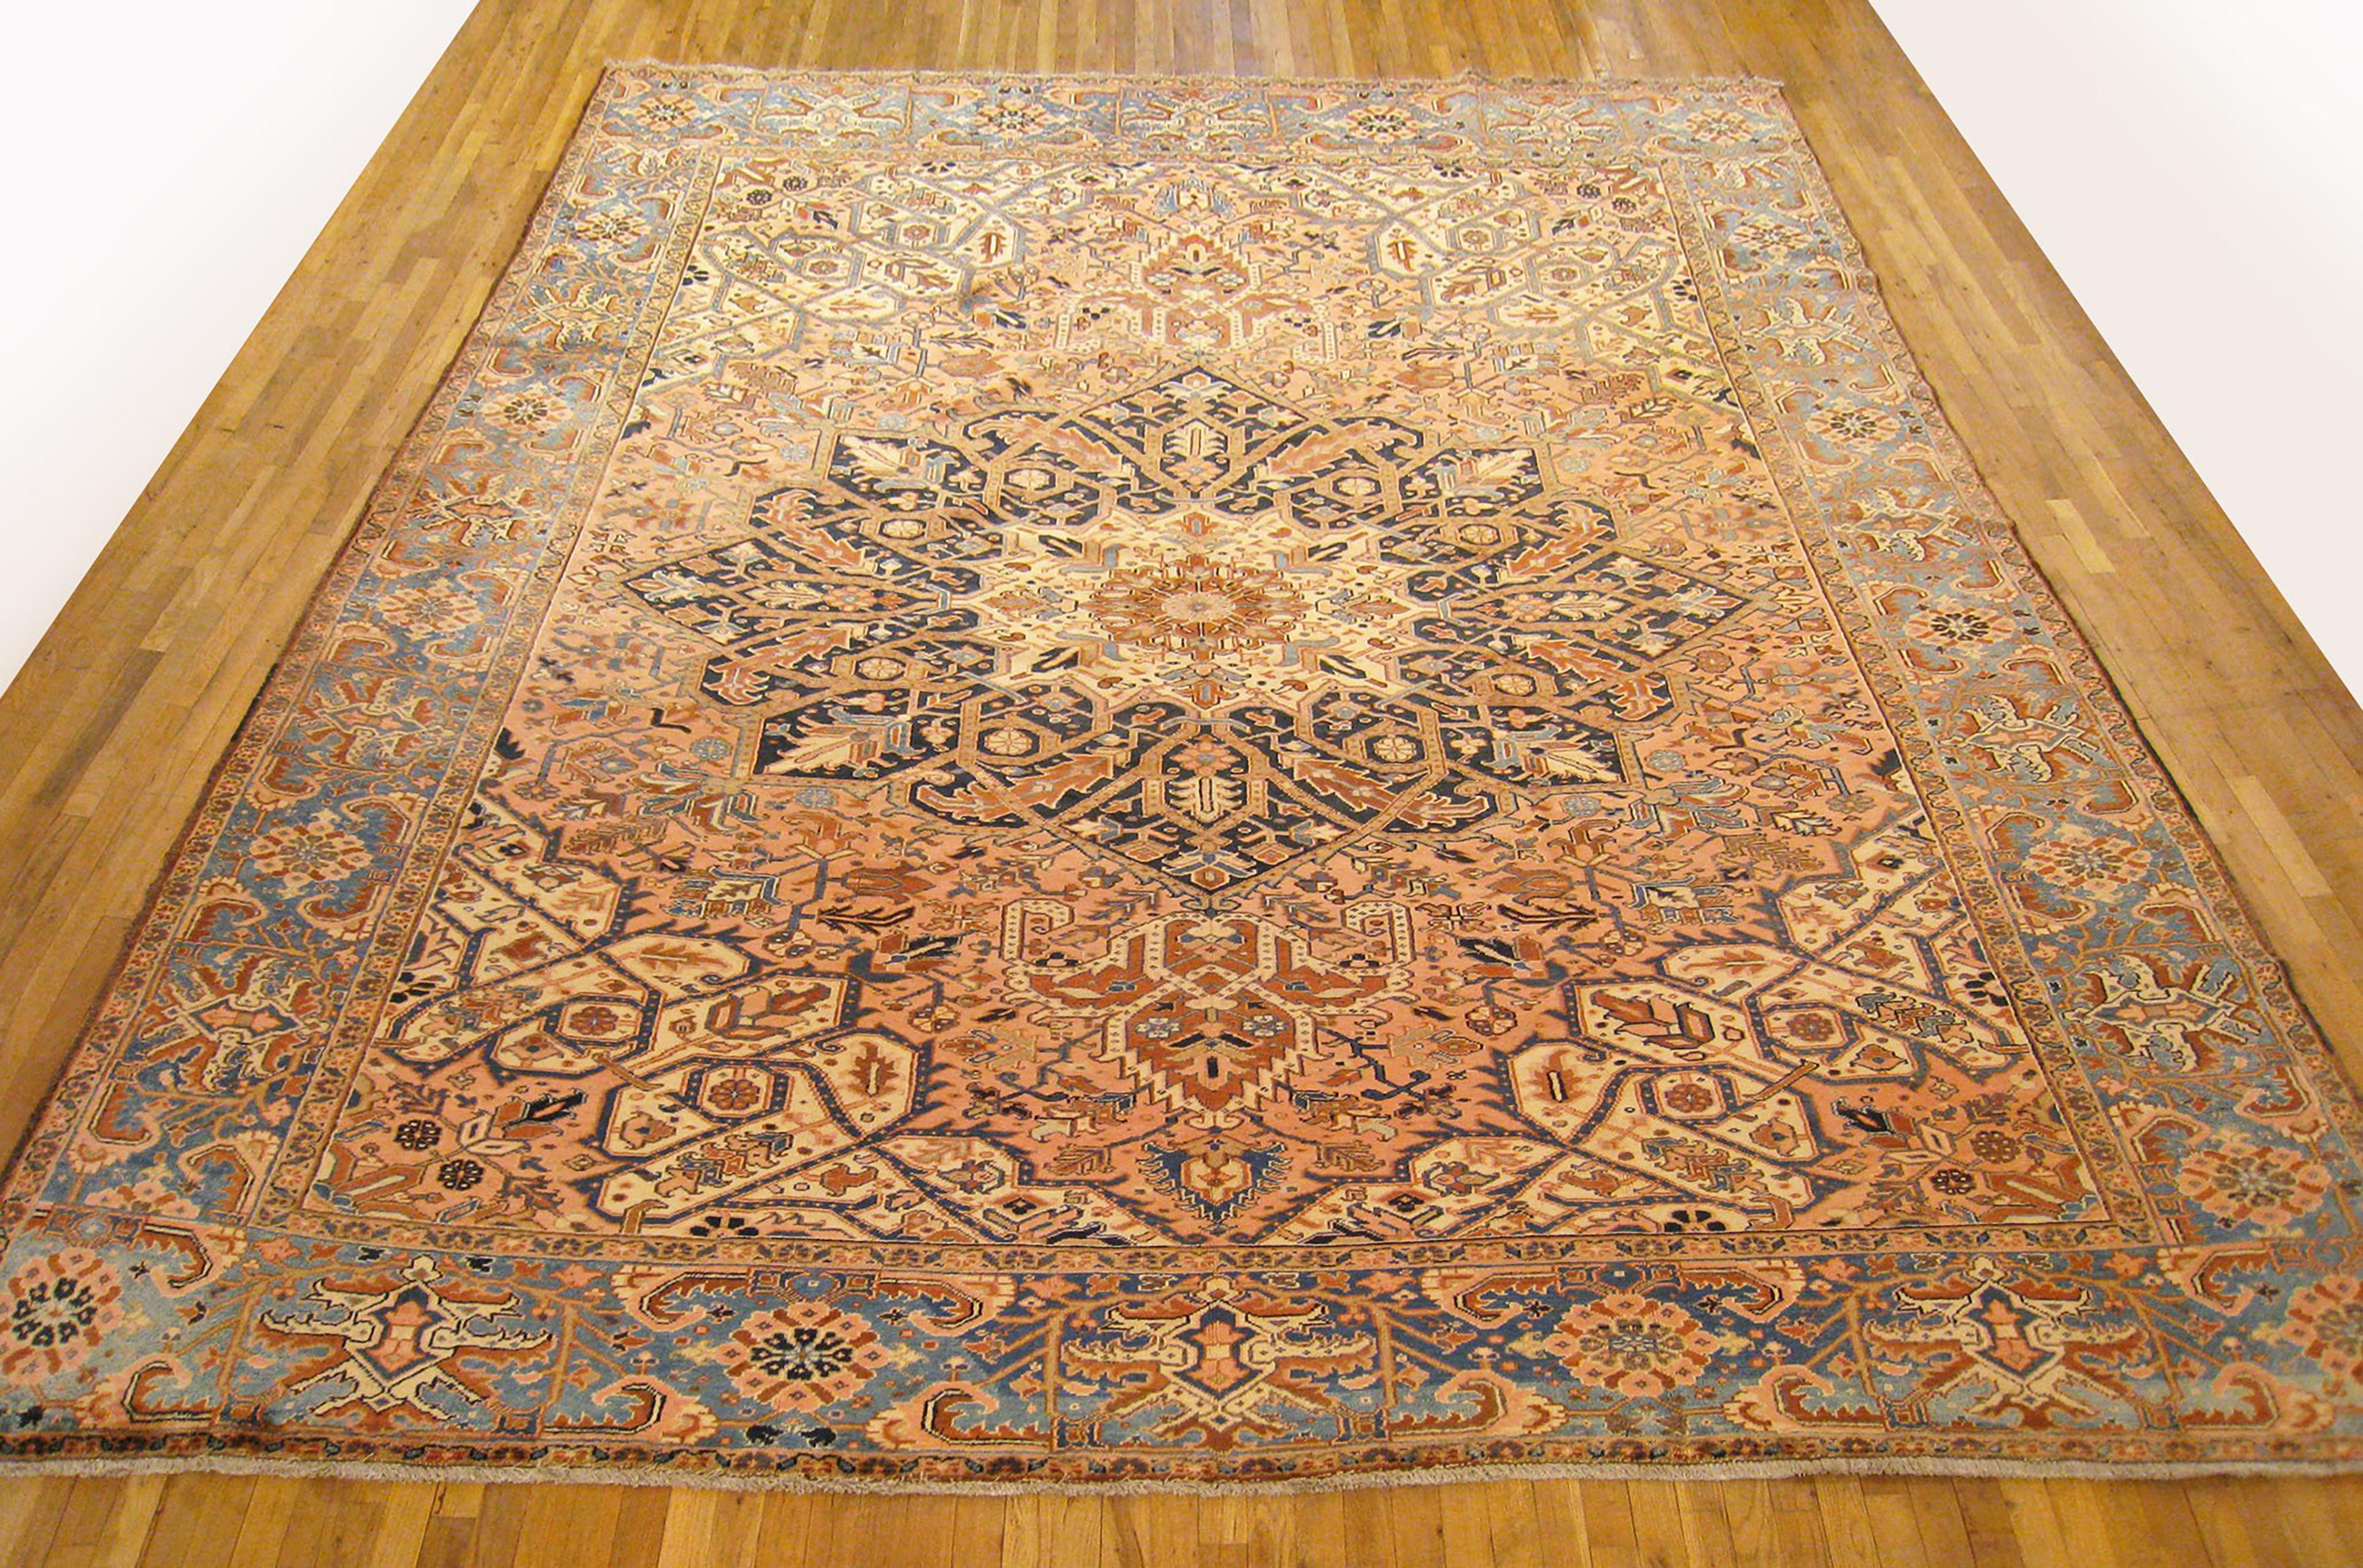 Vintage Persian Heriz Oriental rug, Large size.

A vintage Persian Heriz oriental rug, size 14'8